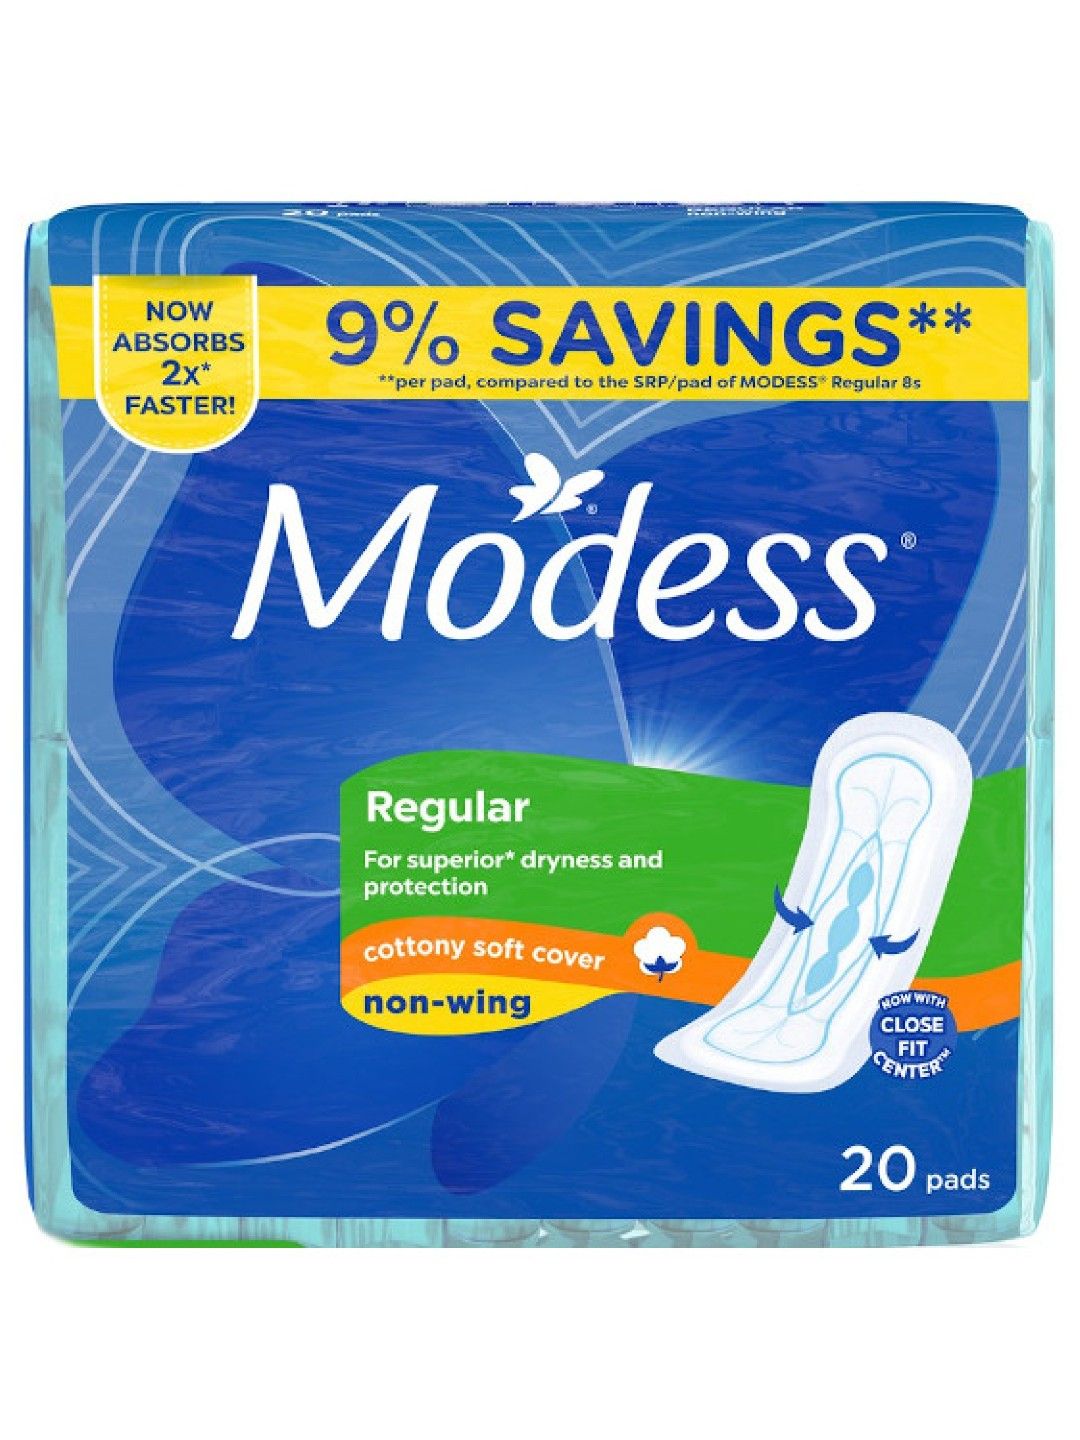 Modess Cottony Soft Non-Wing Sanitary Napkins (20s)